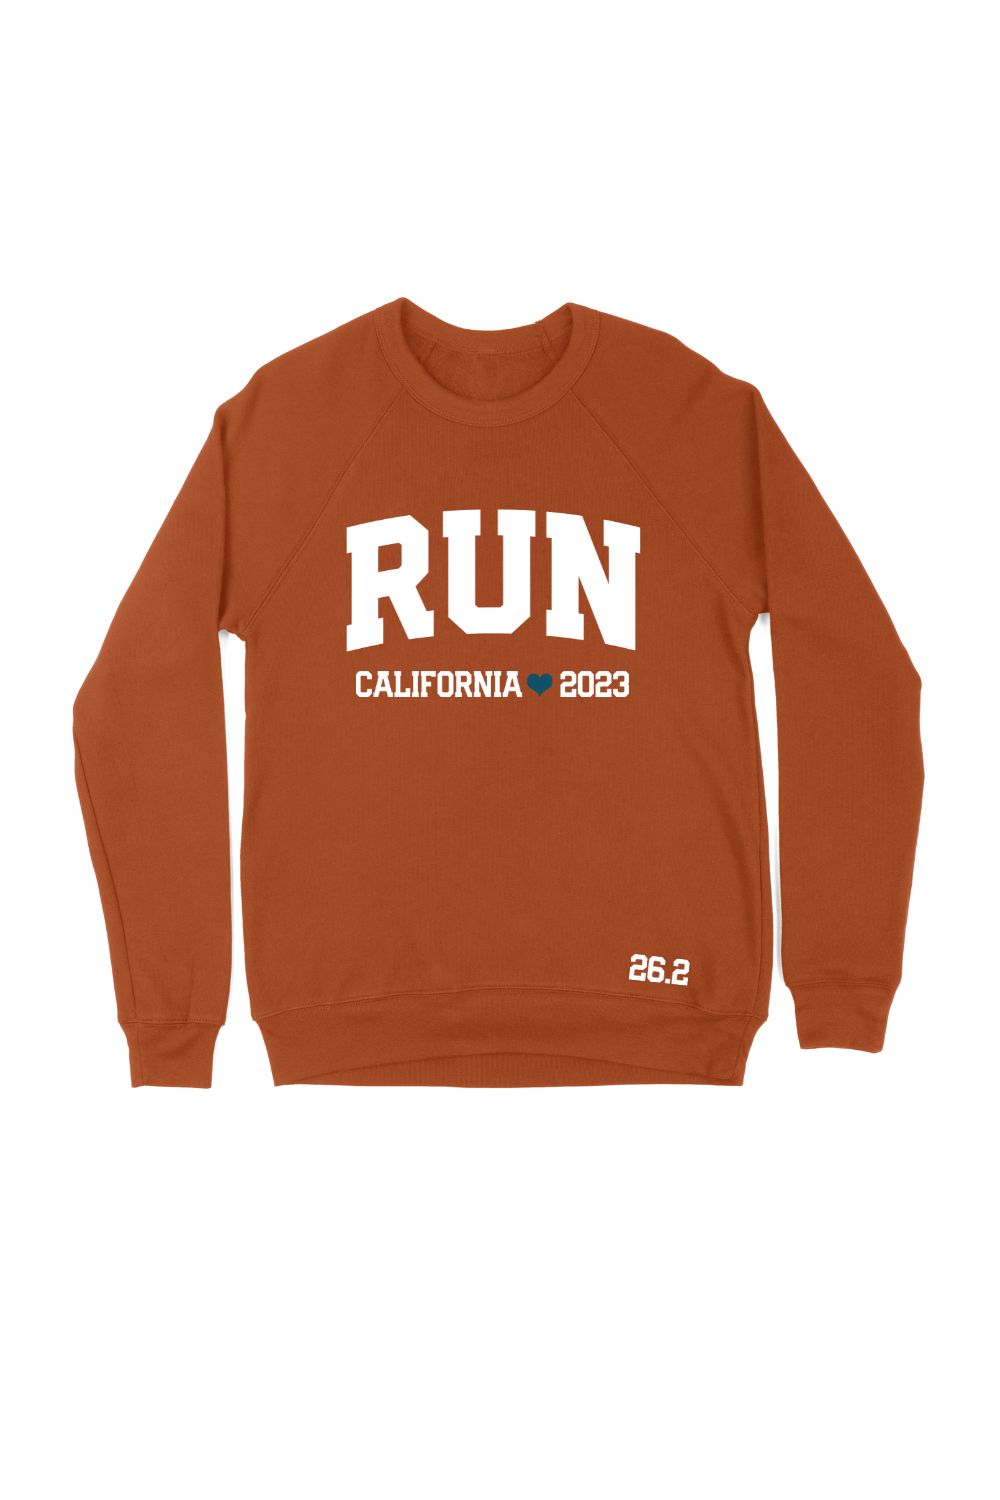 RUN California 2023 Sweatshirt